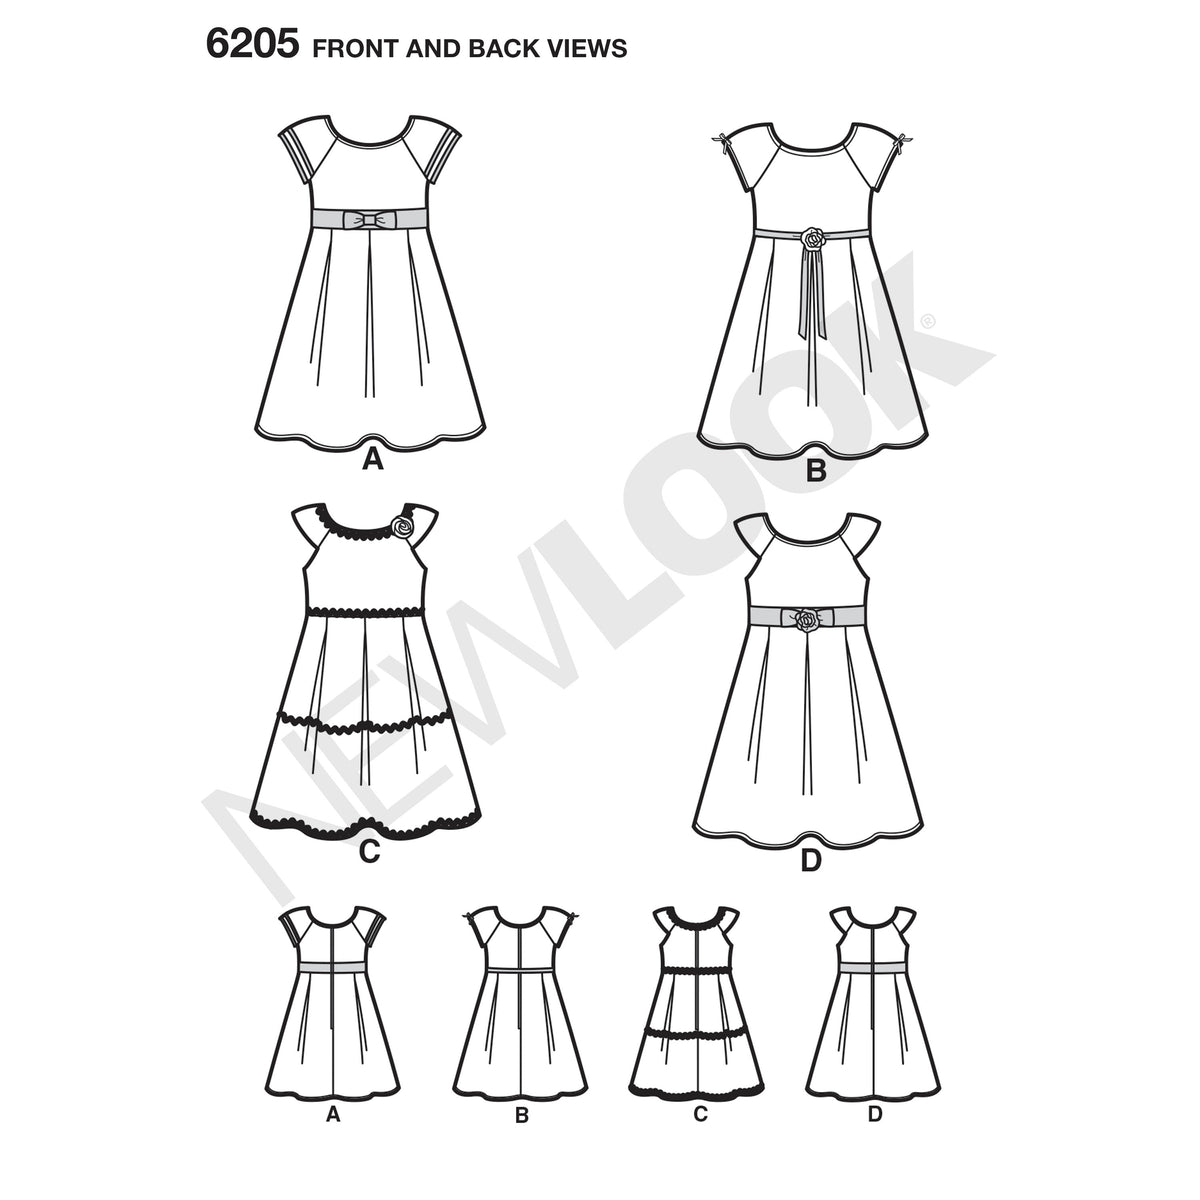 6205 Child's Dress